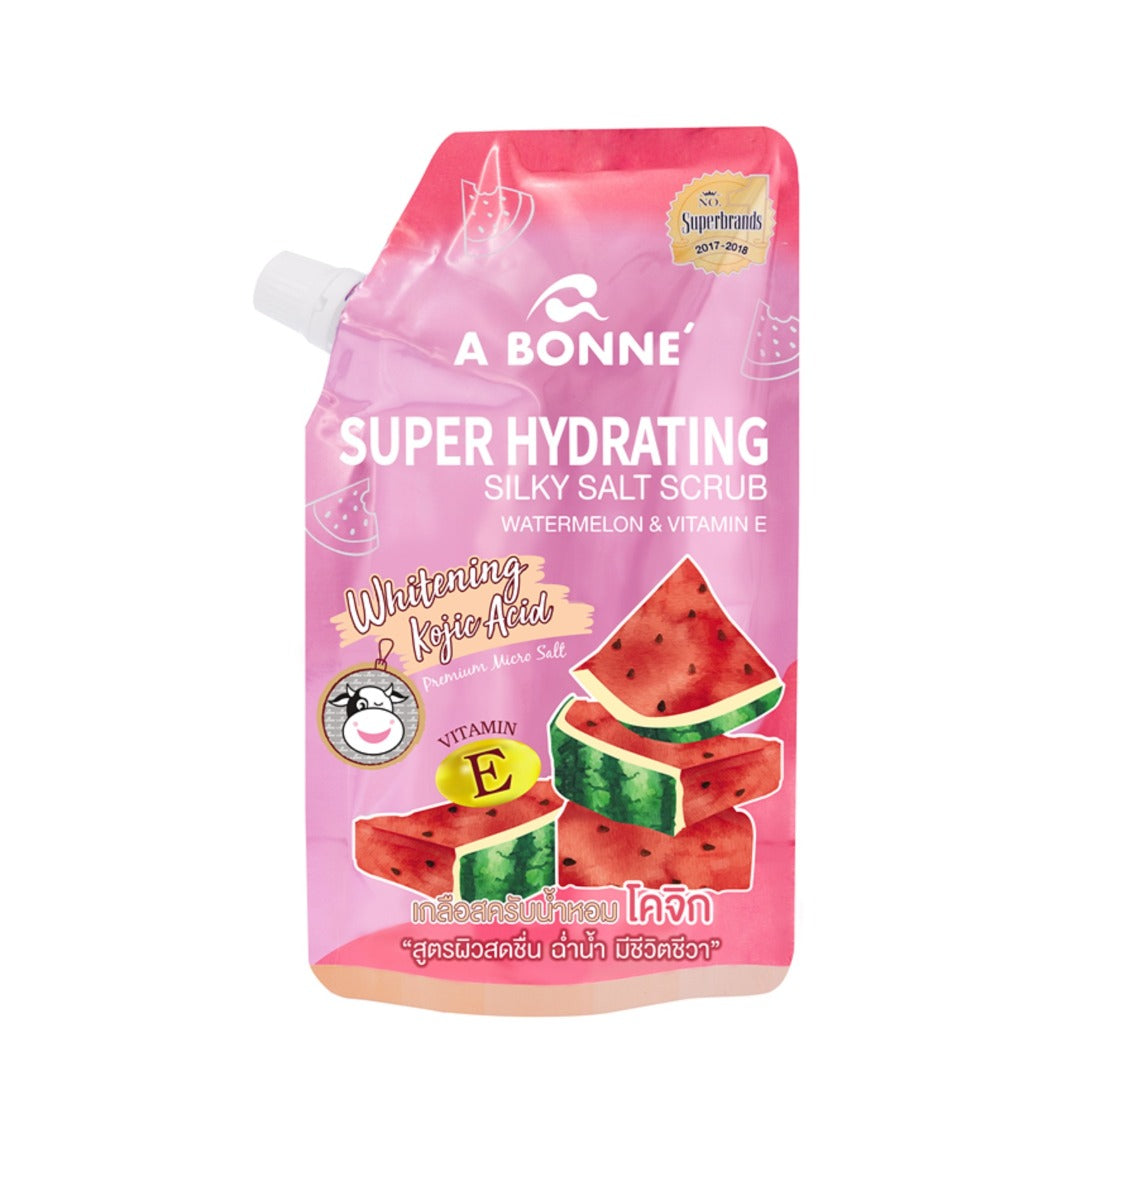 A Bonne Super Hydrating Silky Salt Scrub - Watermelon & Vitamin E, 350g